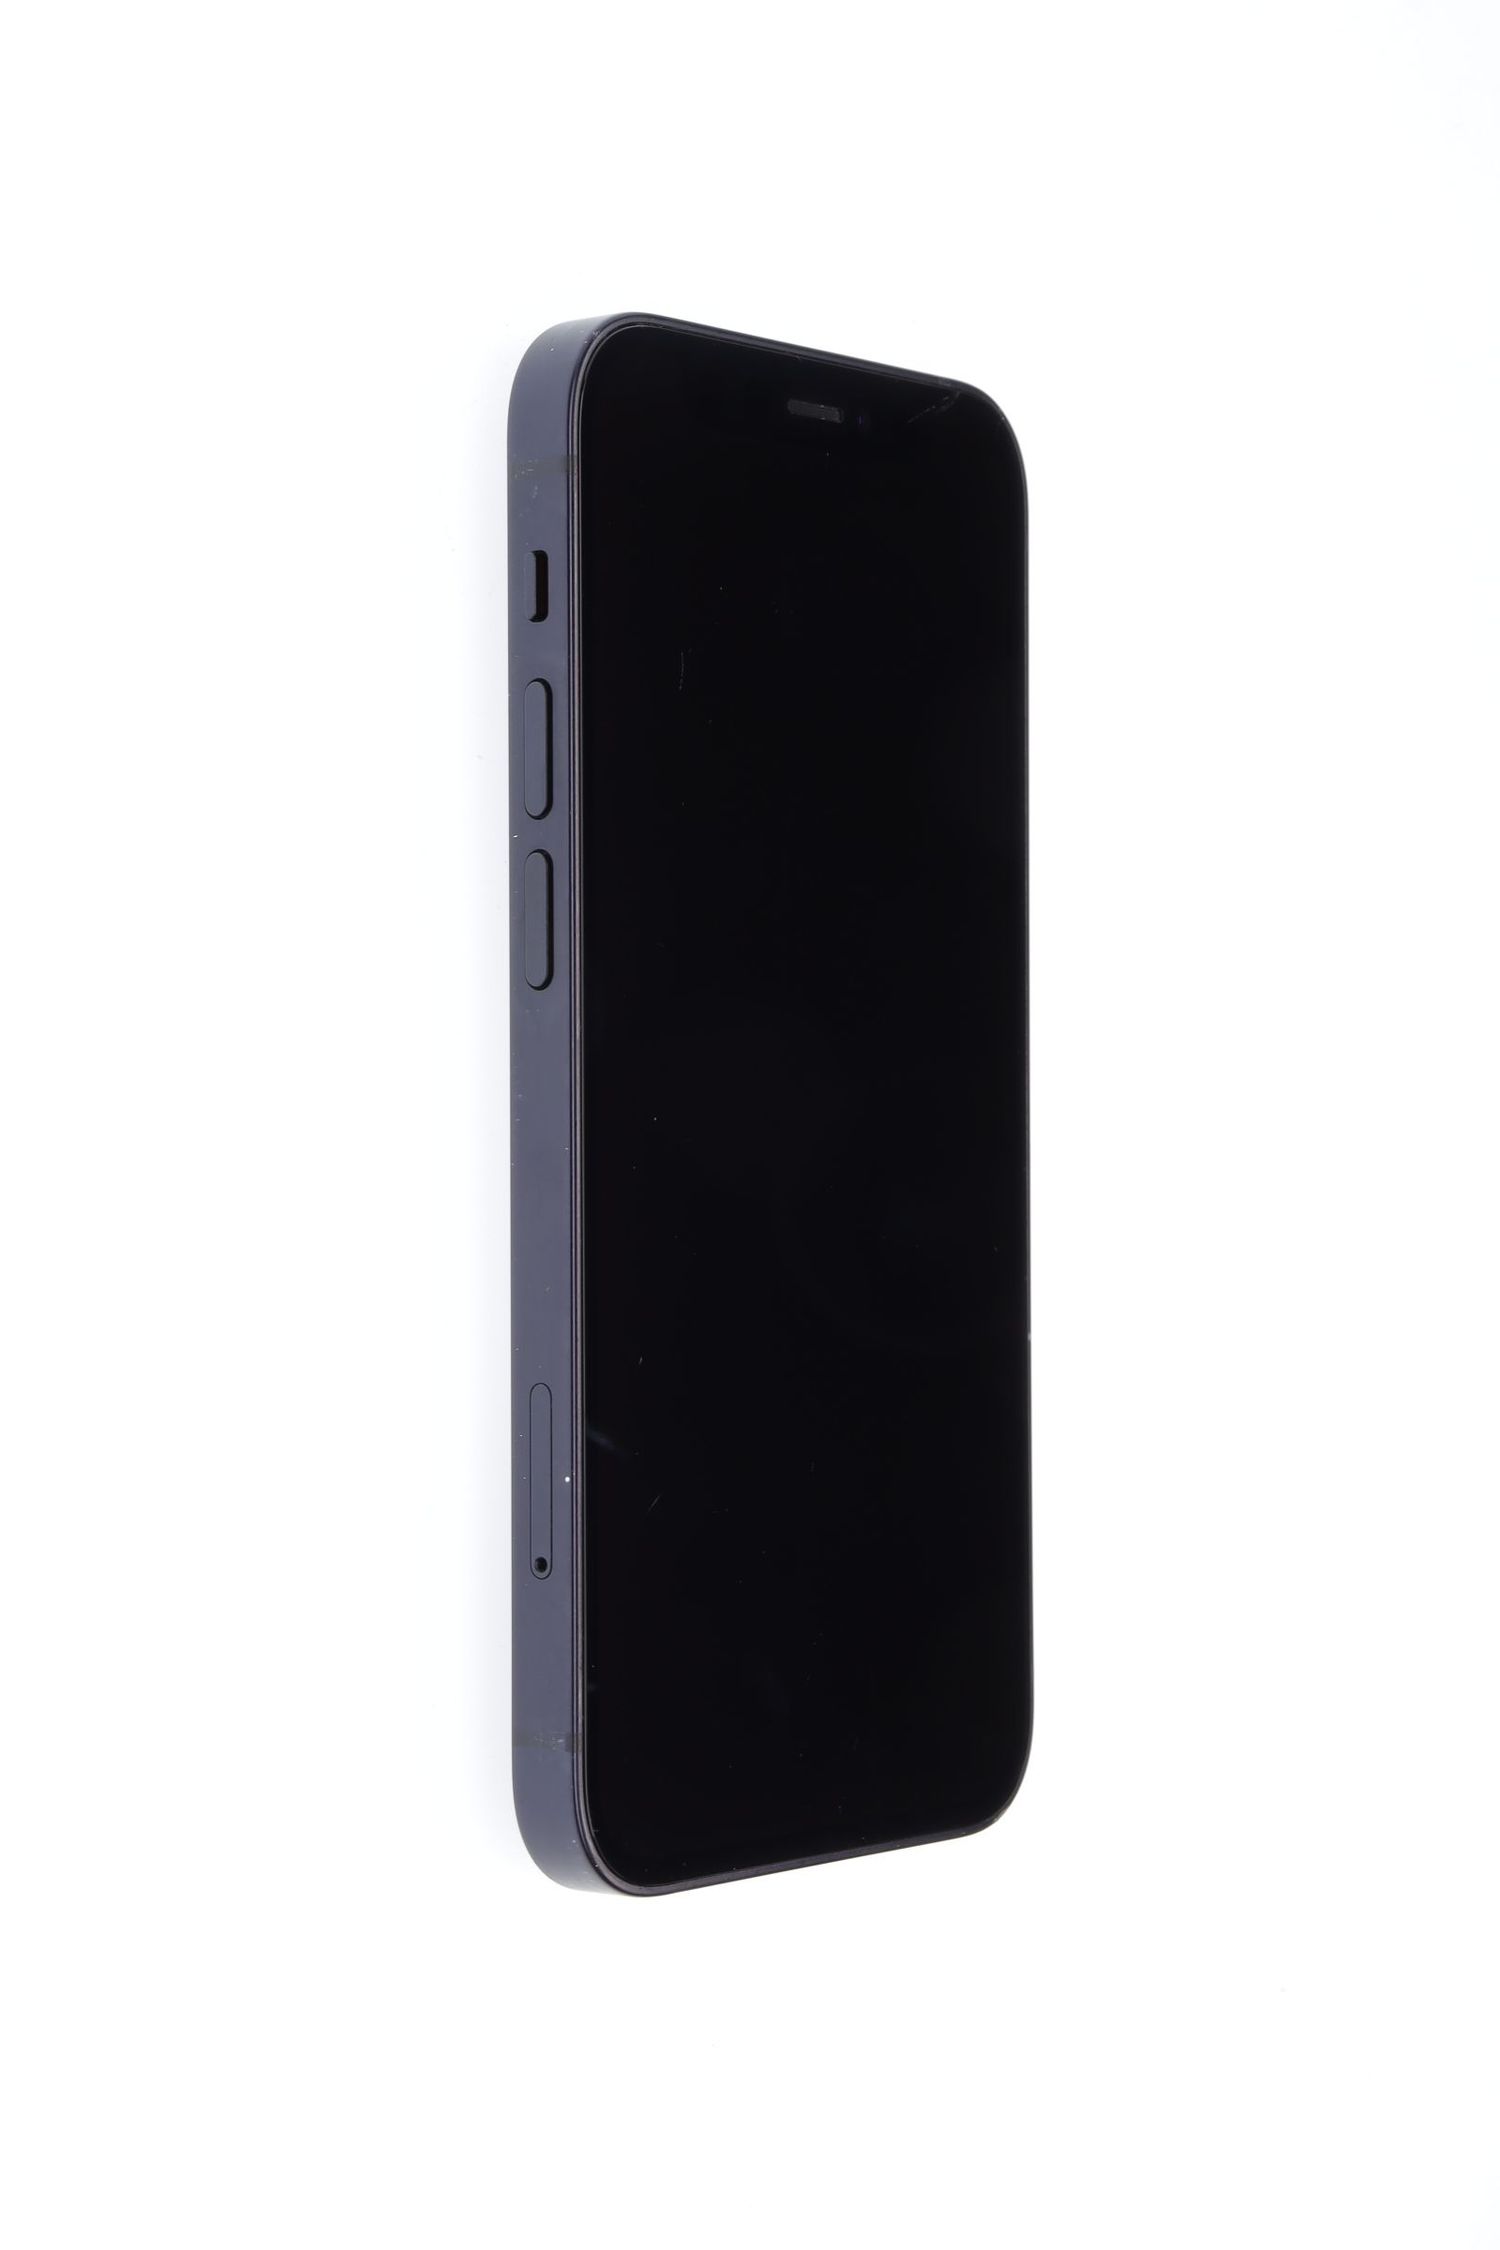 Telefon mobil Apple iPhone 12 mini, Black, 64 GB, Foarte Bun